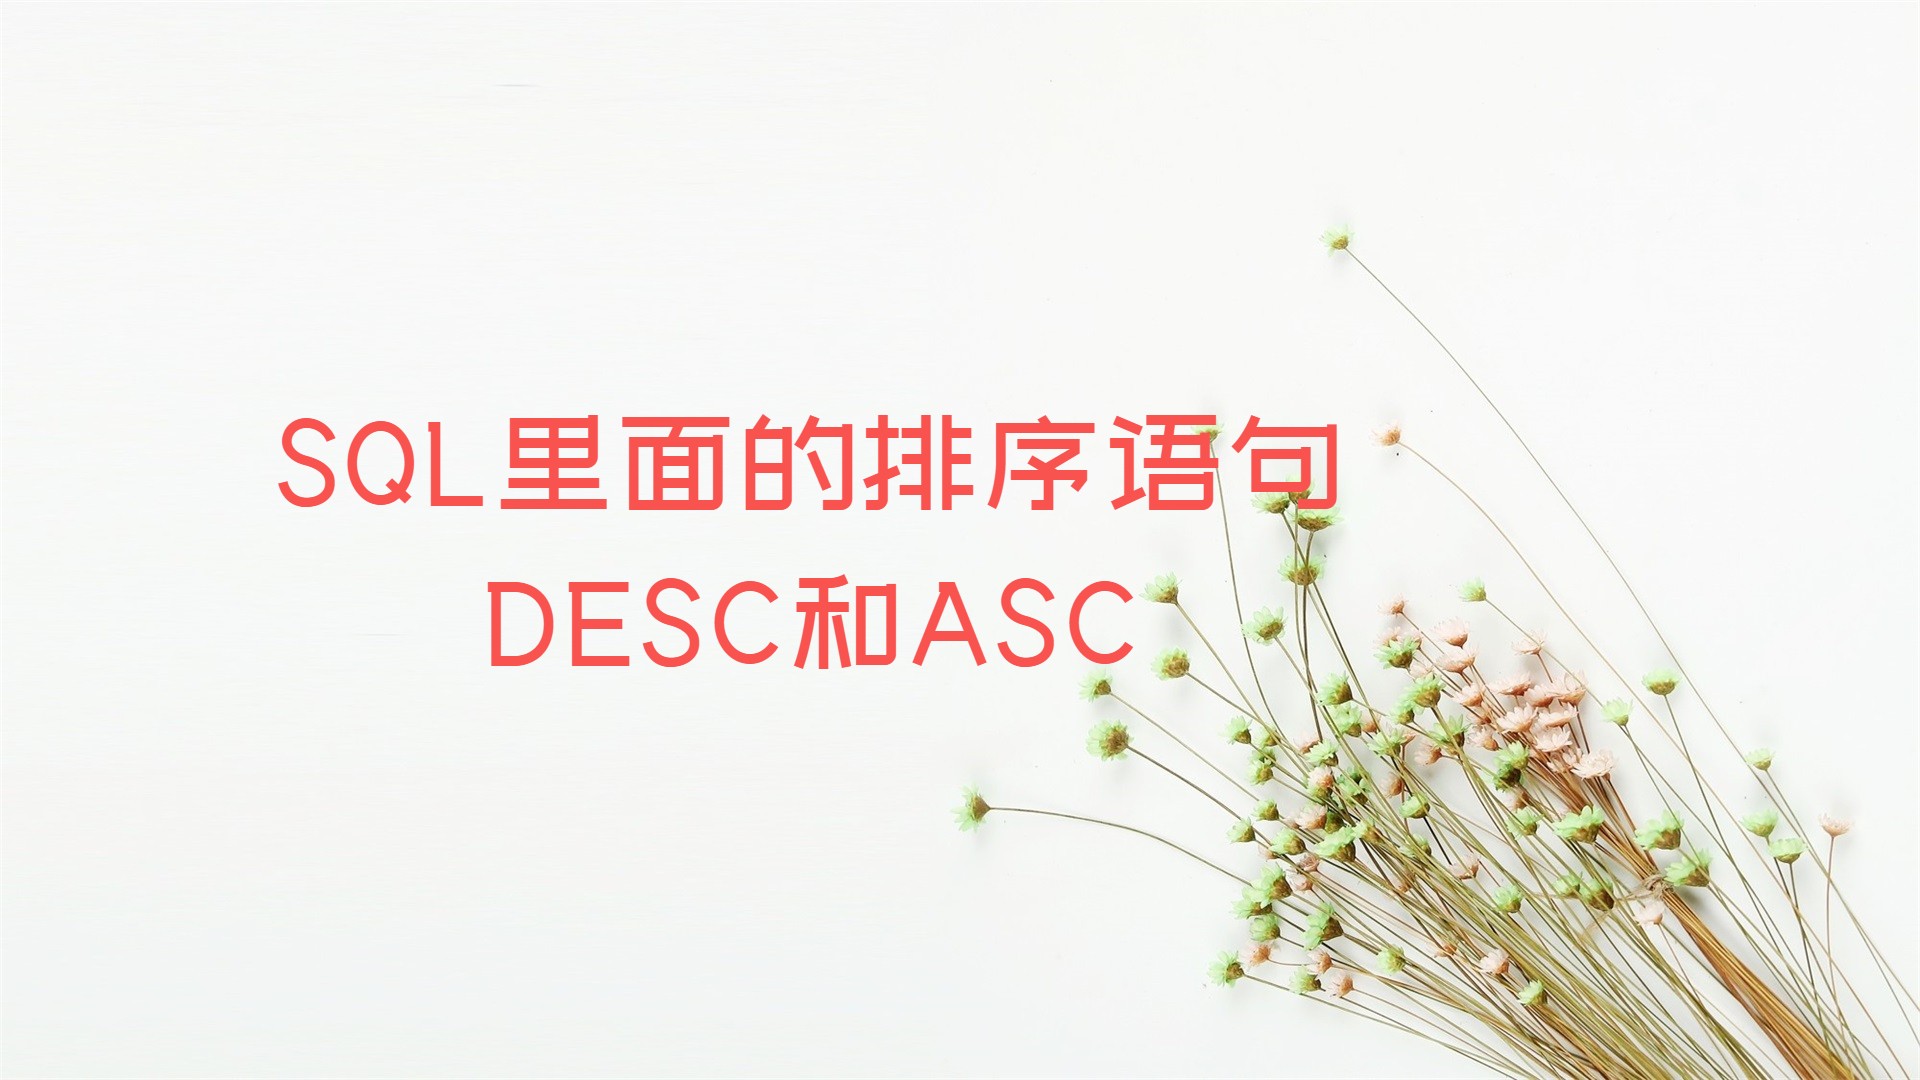 SQL里面的排序语句DESC和ASC